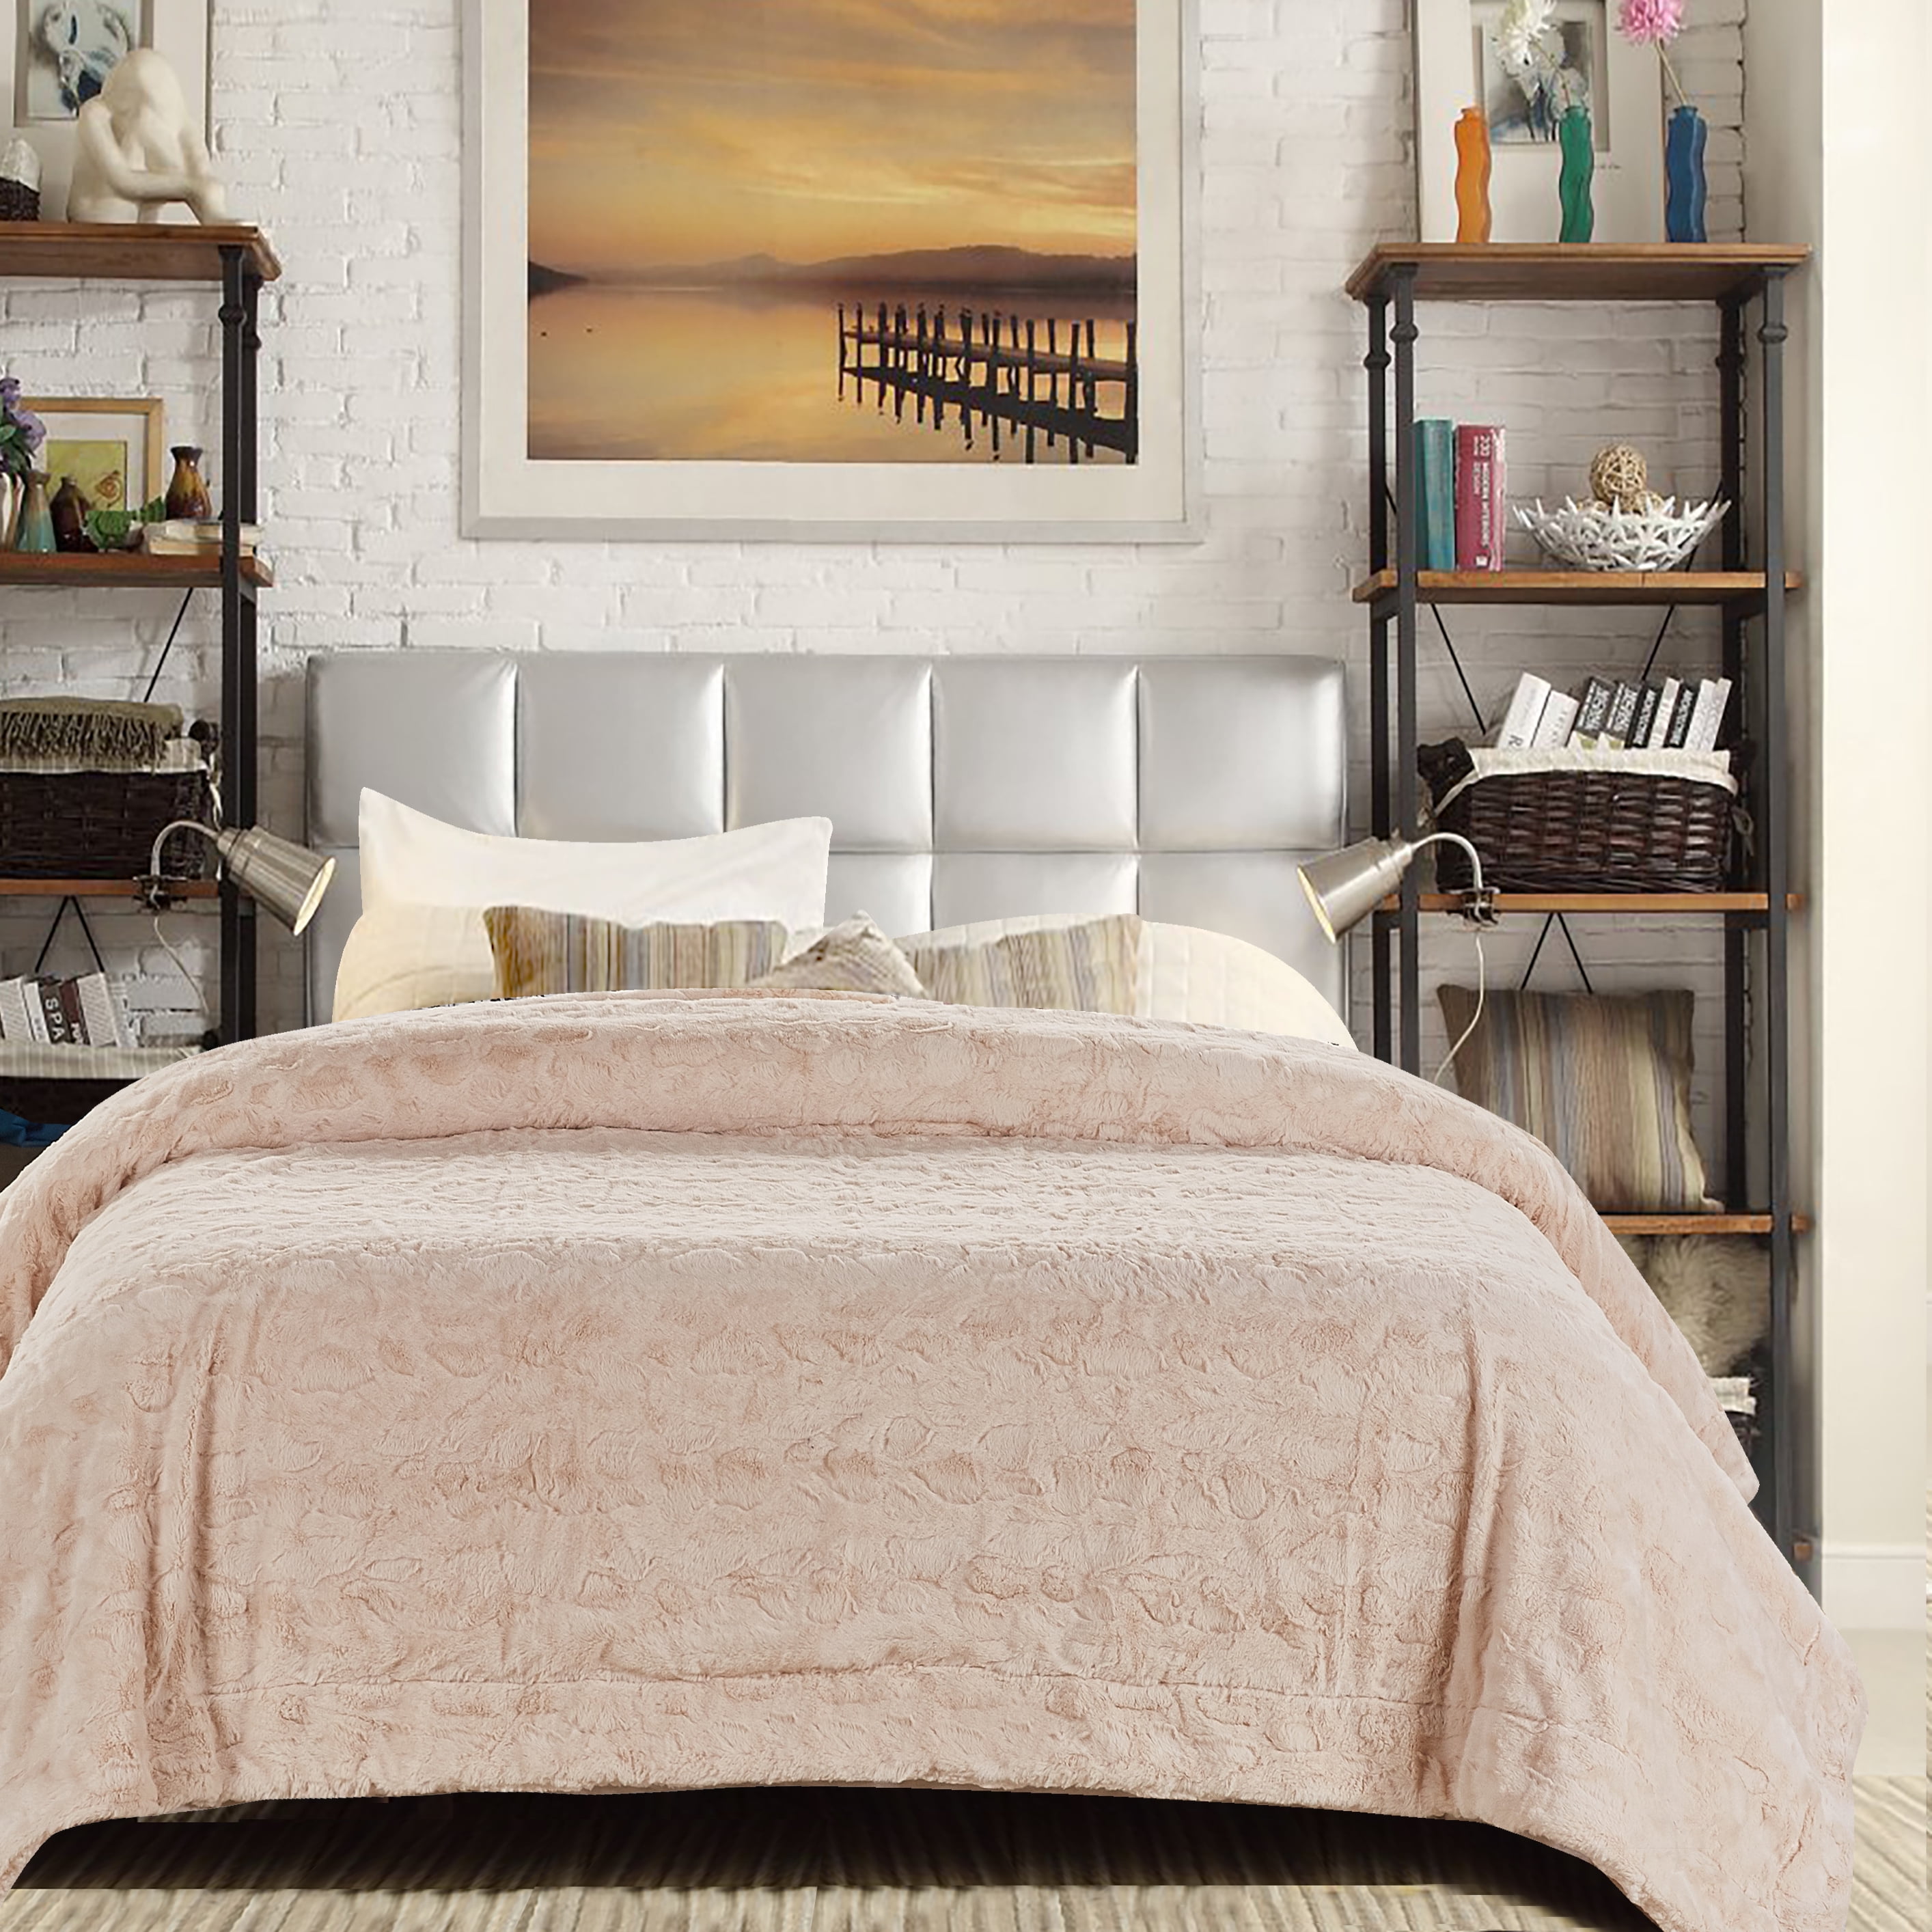 Kiuloam Fantastic Pineapple Flannel Fleece Throw Blanket 50x60 Living Room/Bedroom/Sofa Couch Warm Soft Bed Blanket for Kids Adults All Season 